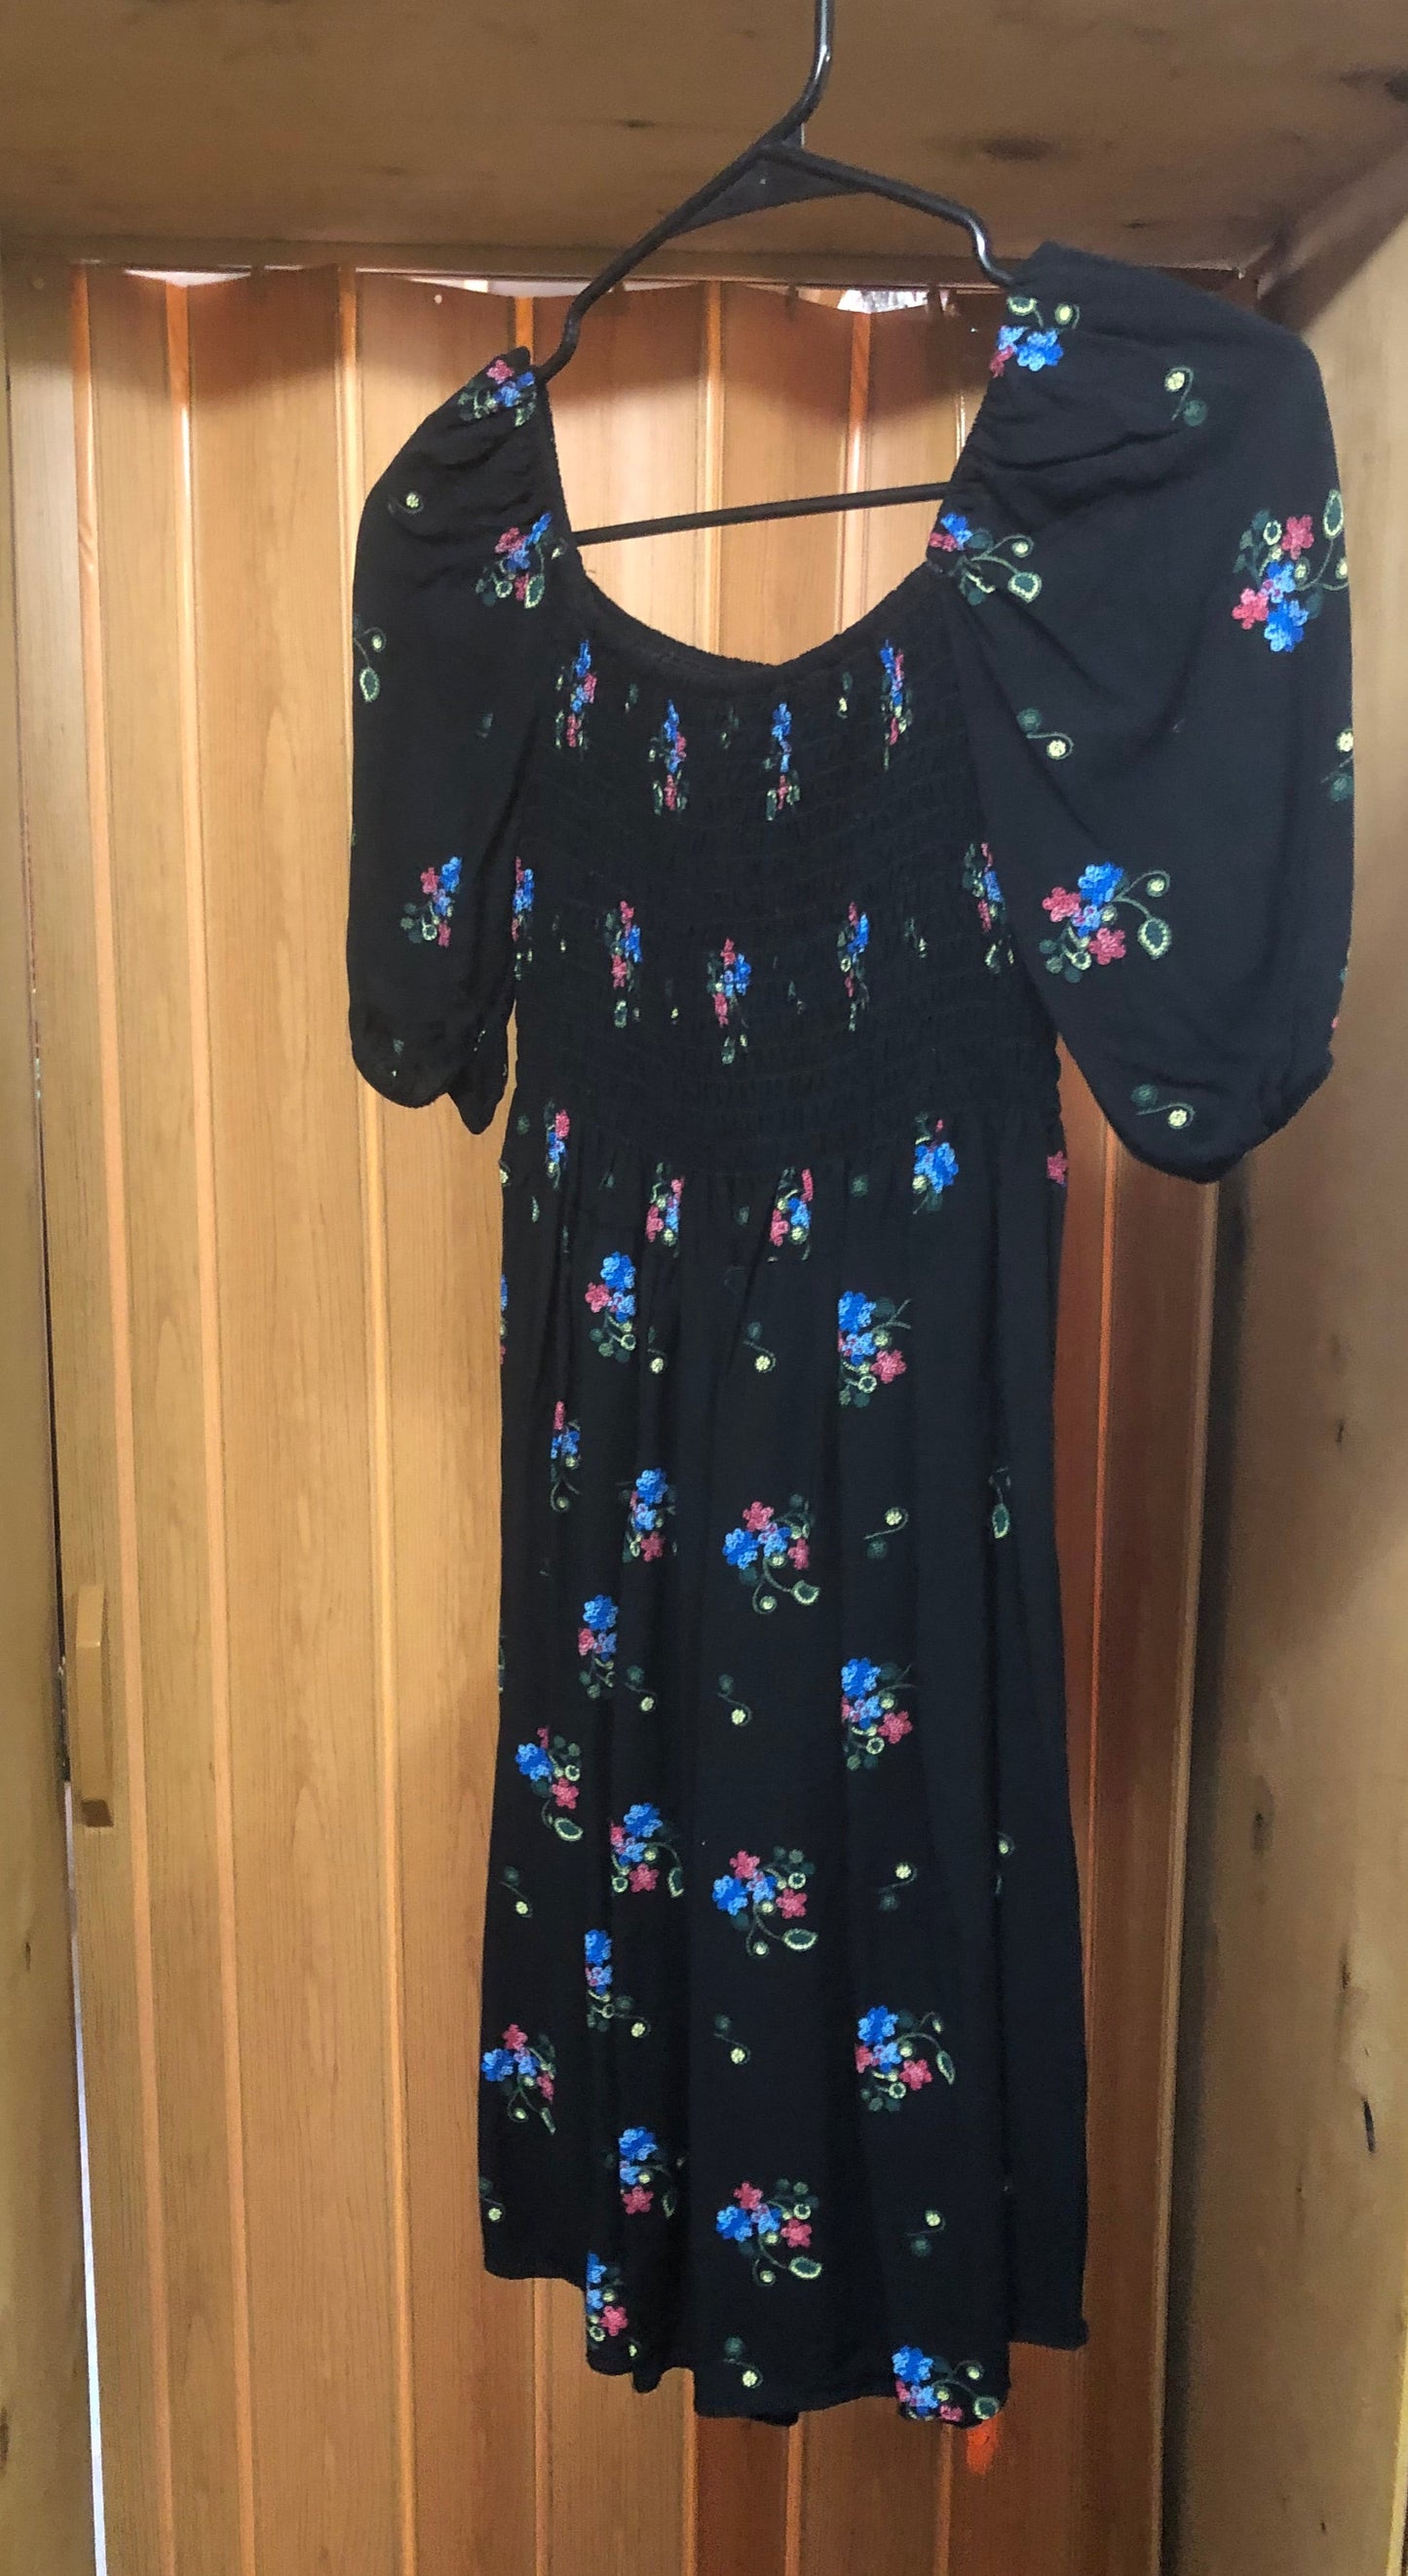 Summer Romper Dress Color Black Multi With Floral Print "New Arrival"